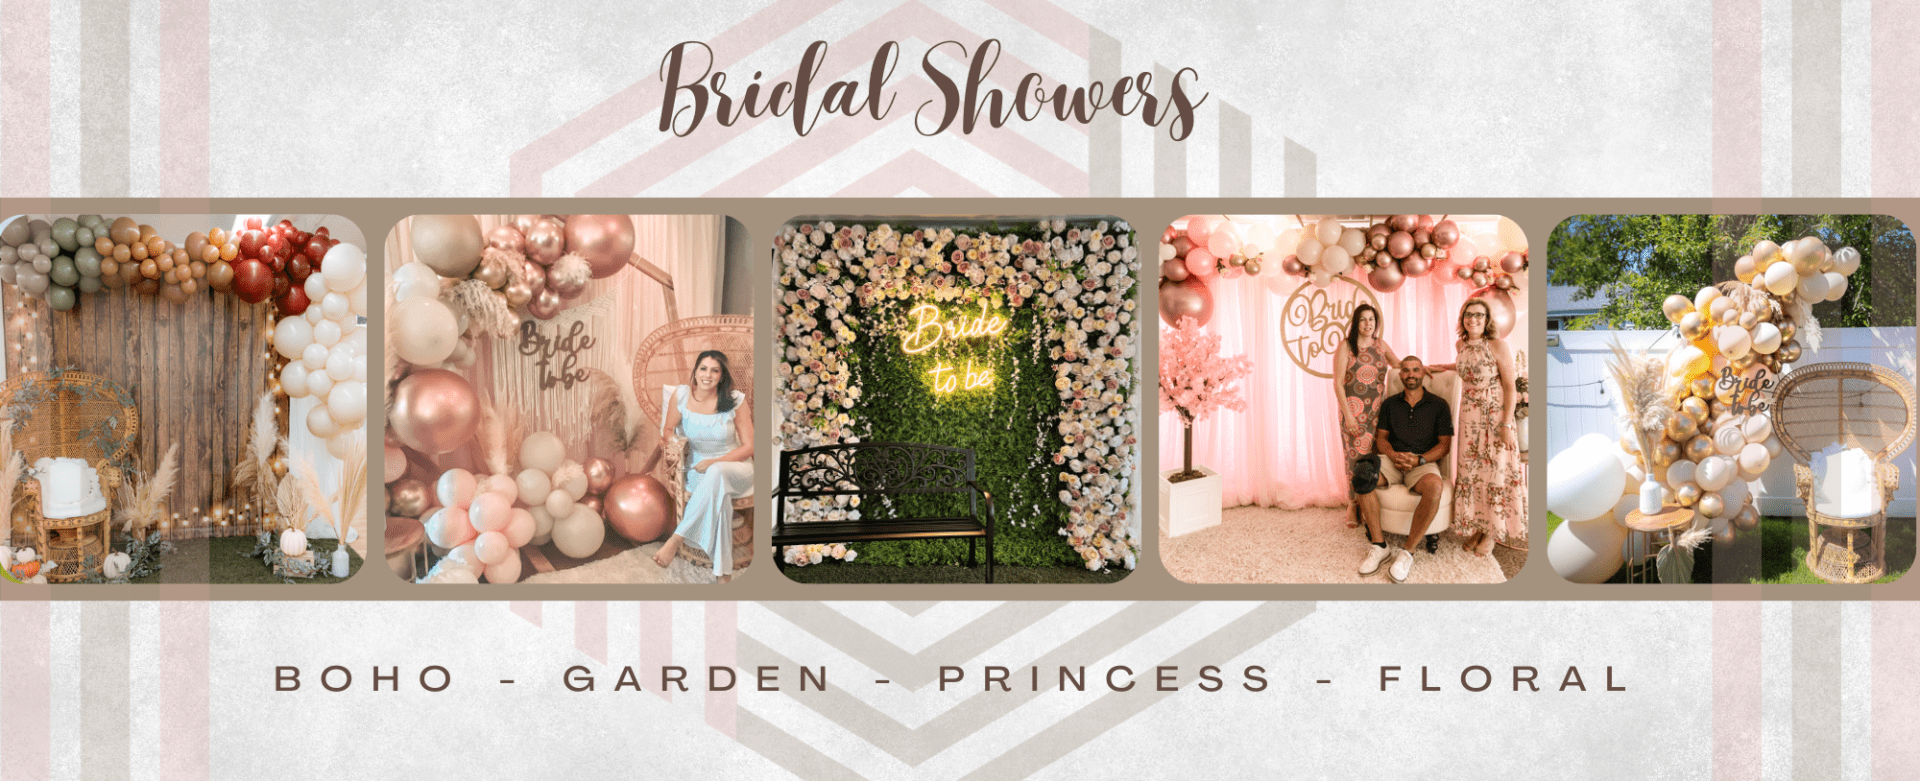 Bridal Shower Decorations